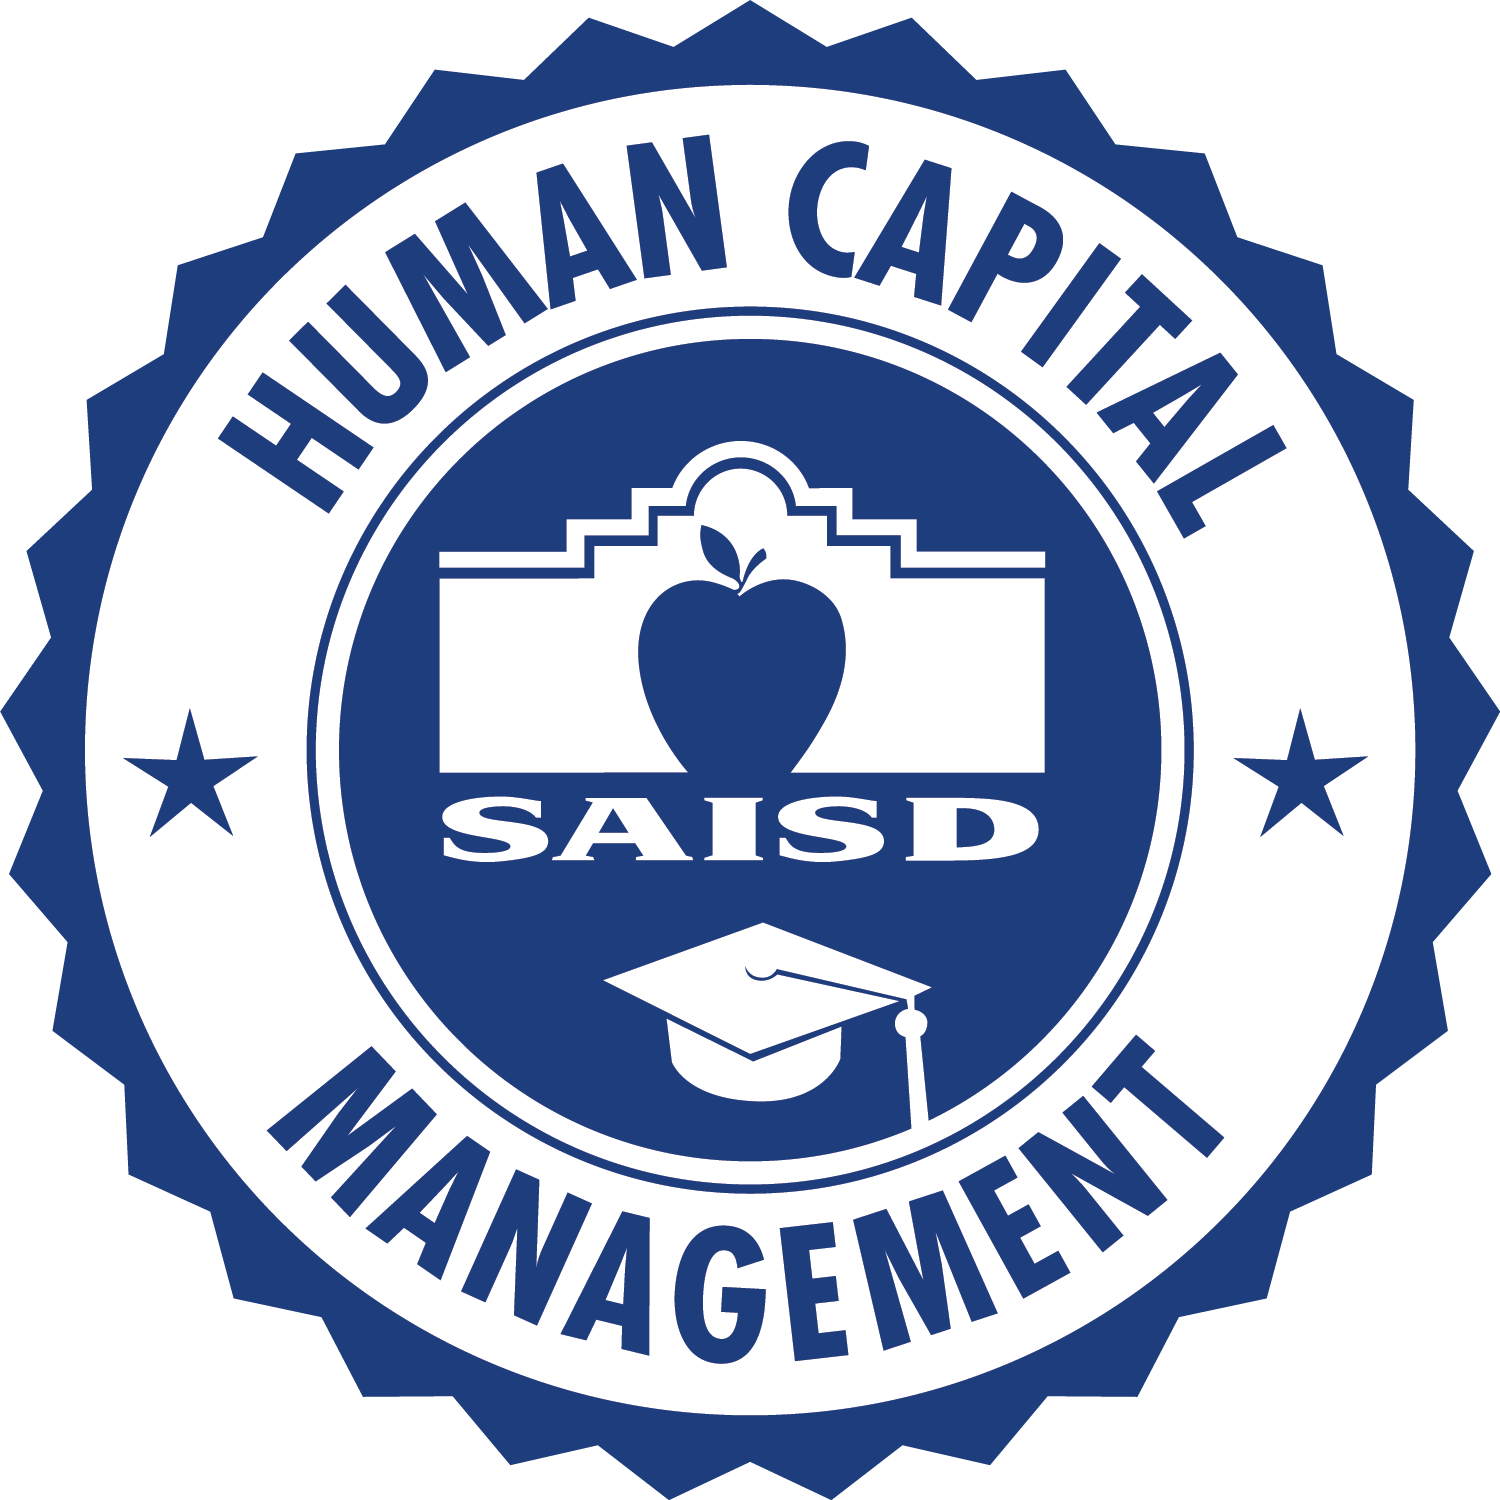 Human Capital Management logo